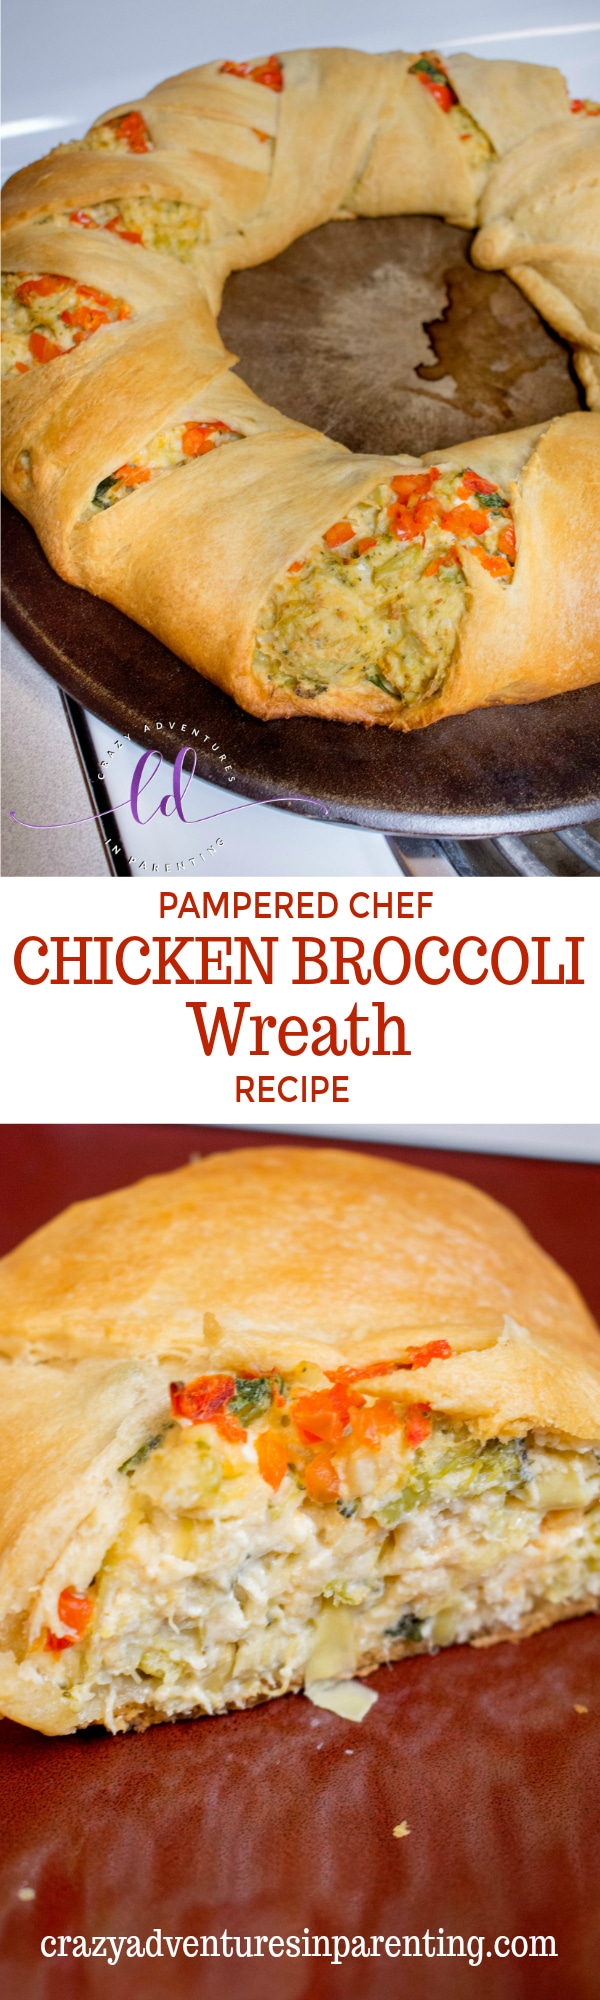 Pampered Chef Chicken Broccoli Wreath Recipe